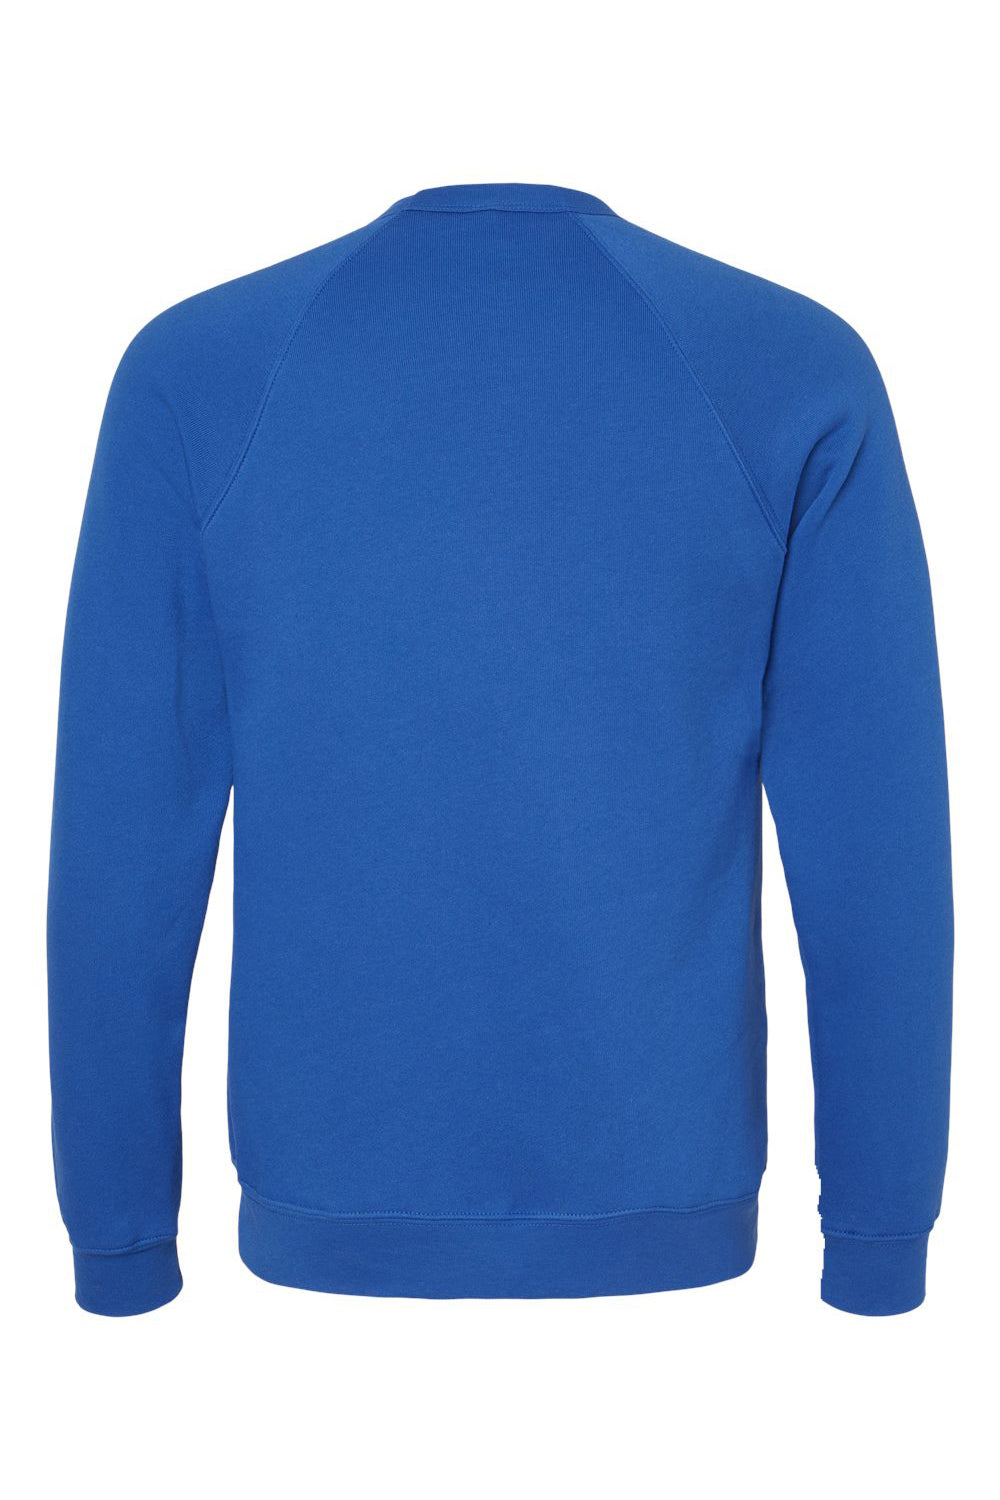 Bella + Canvas BC3901/3901 Mens Sponge Fleece Crewneck Sweatshirt True Royal Blue Flat Back